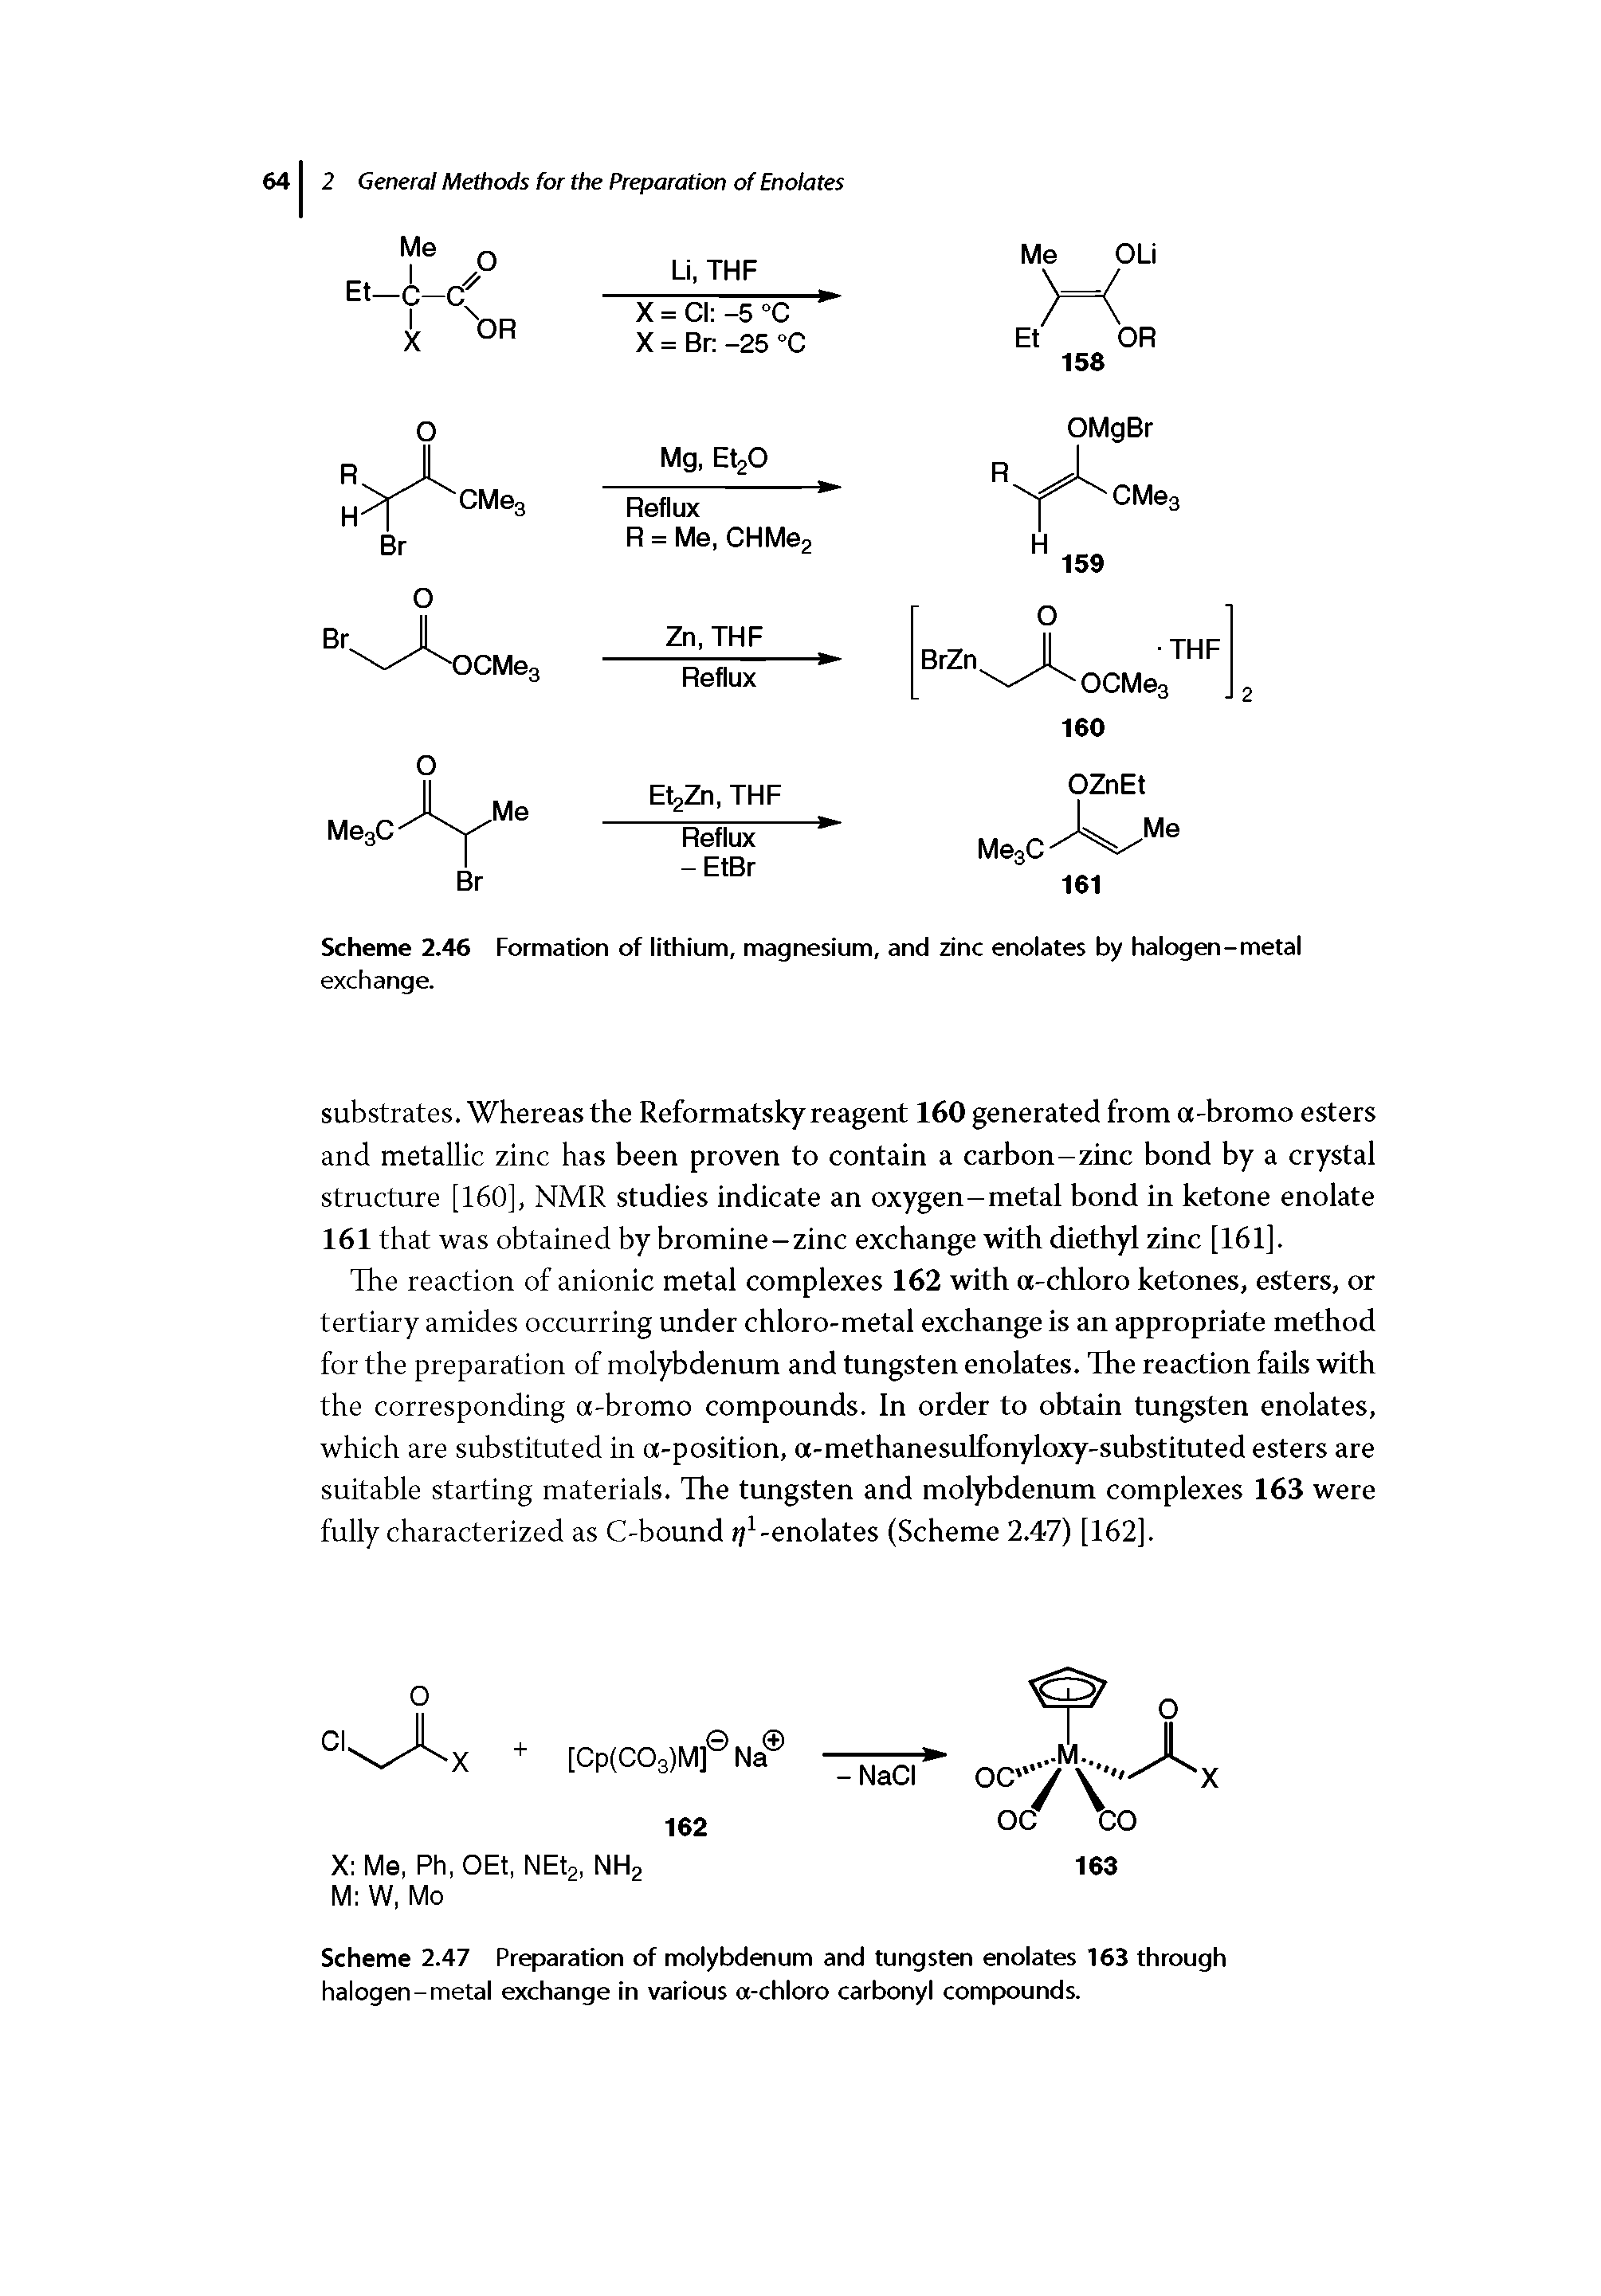 Scheme 2.47 Preparation of molybdenum and tungsten enolates 163 through halogen-metal exchange in various a-chloro carbonyl compounds.